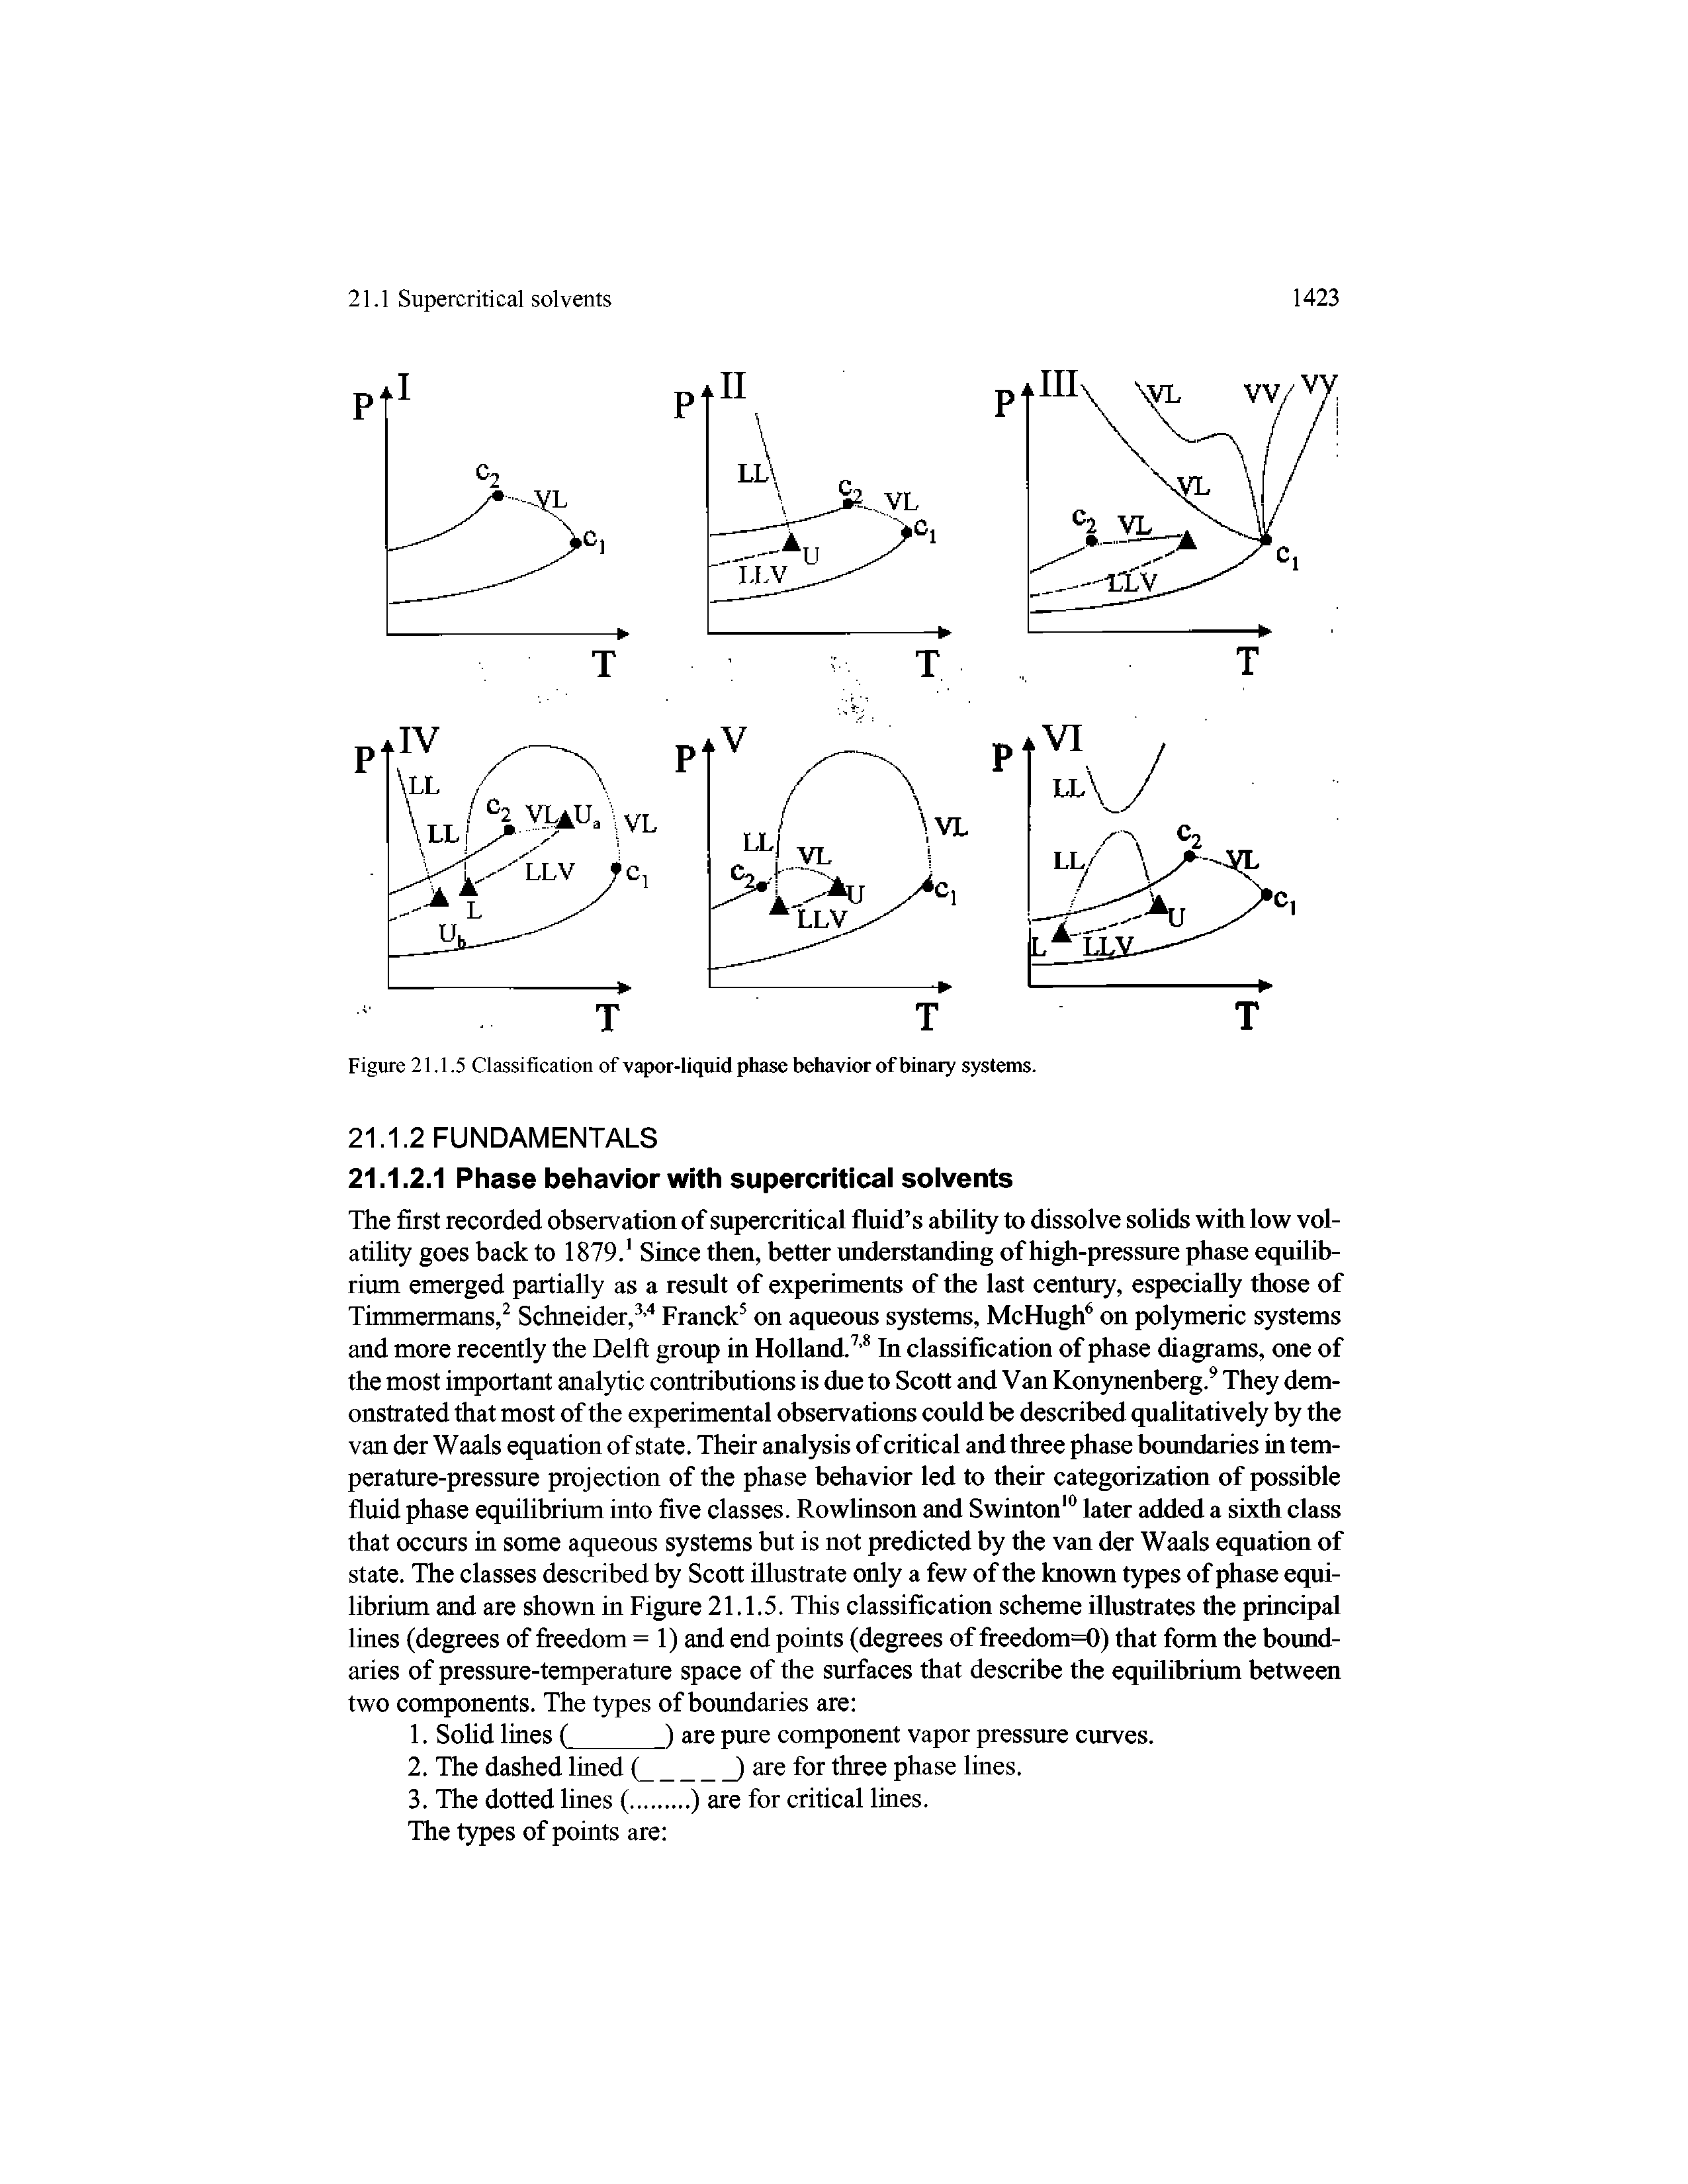 Figure 21.1.5 Classification of vapor-liquid phase behavior of binary systems.